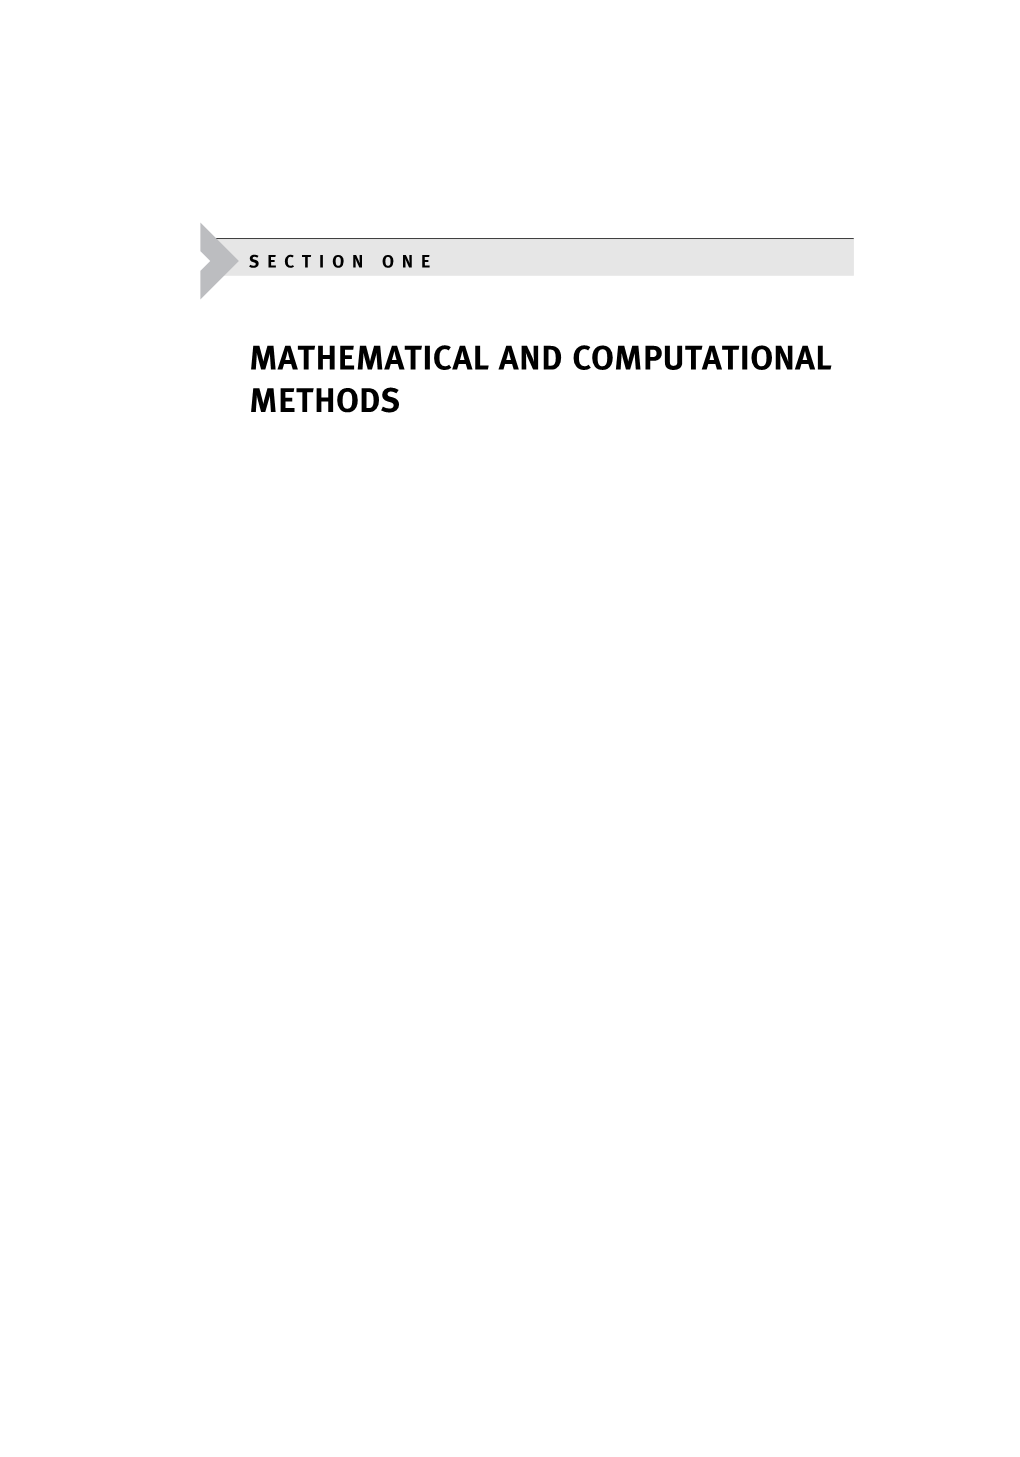 Mathematical and Computational Methods